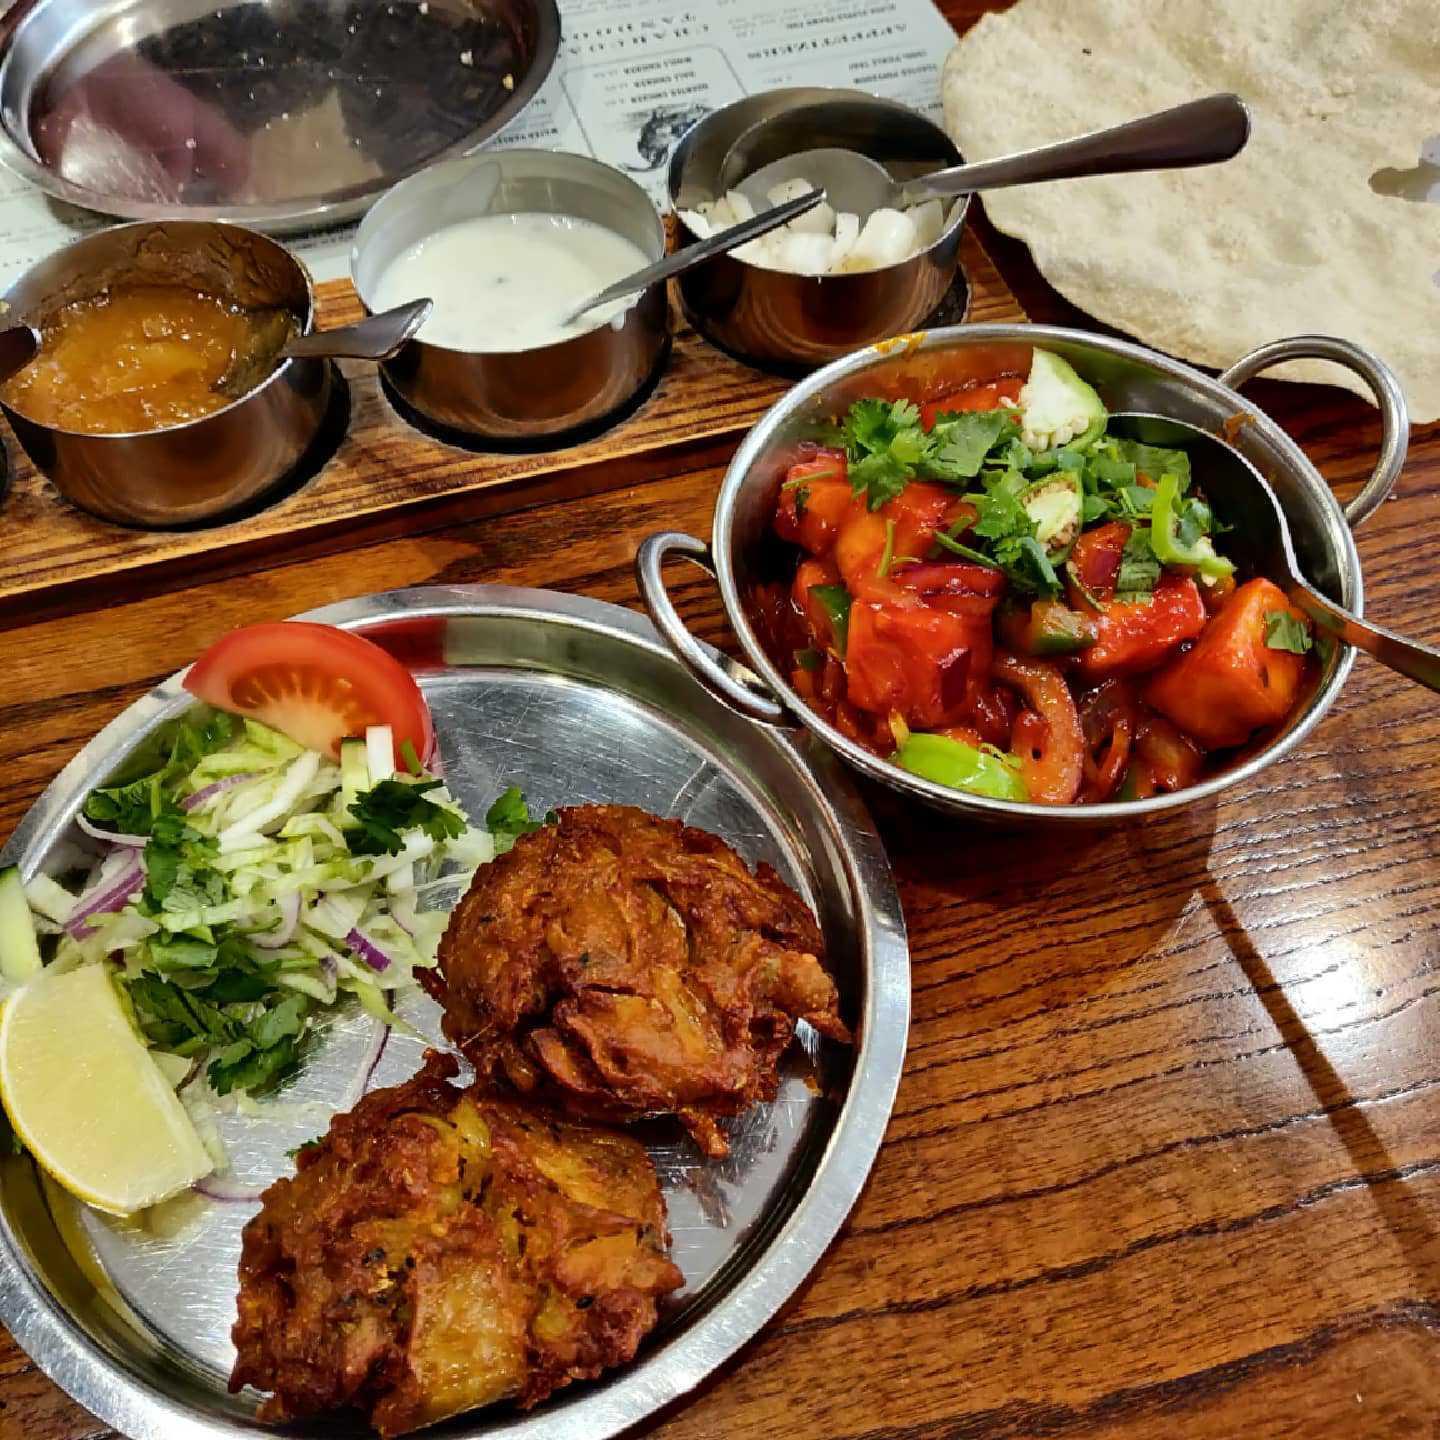 Ashoka onion bhajis and pickle tray